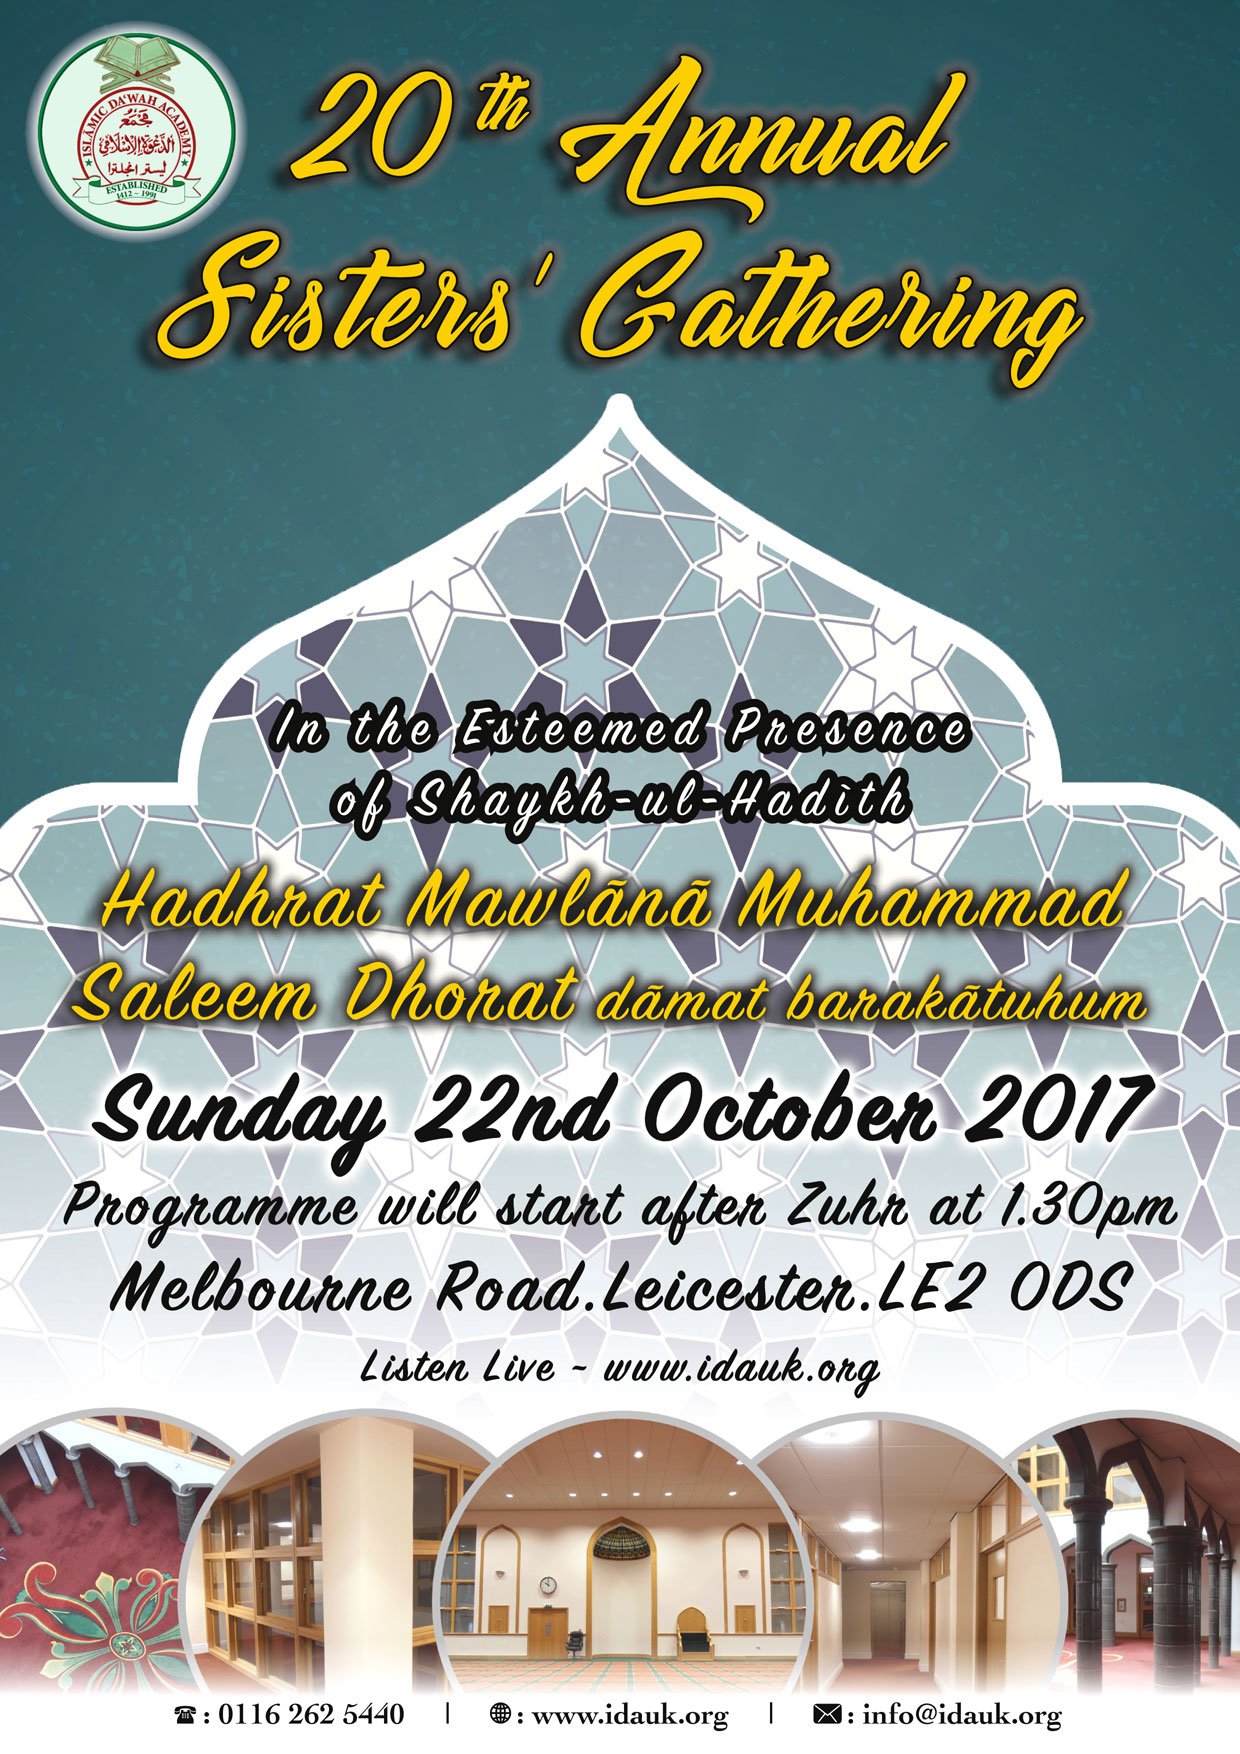 20asg 1 - Islamic Da`wah Academy 20th Annual Sisters Gathering